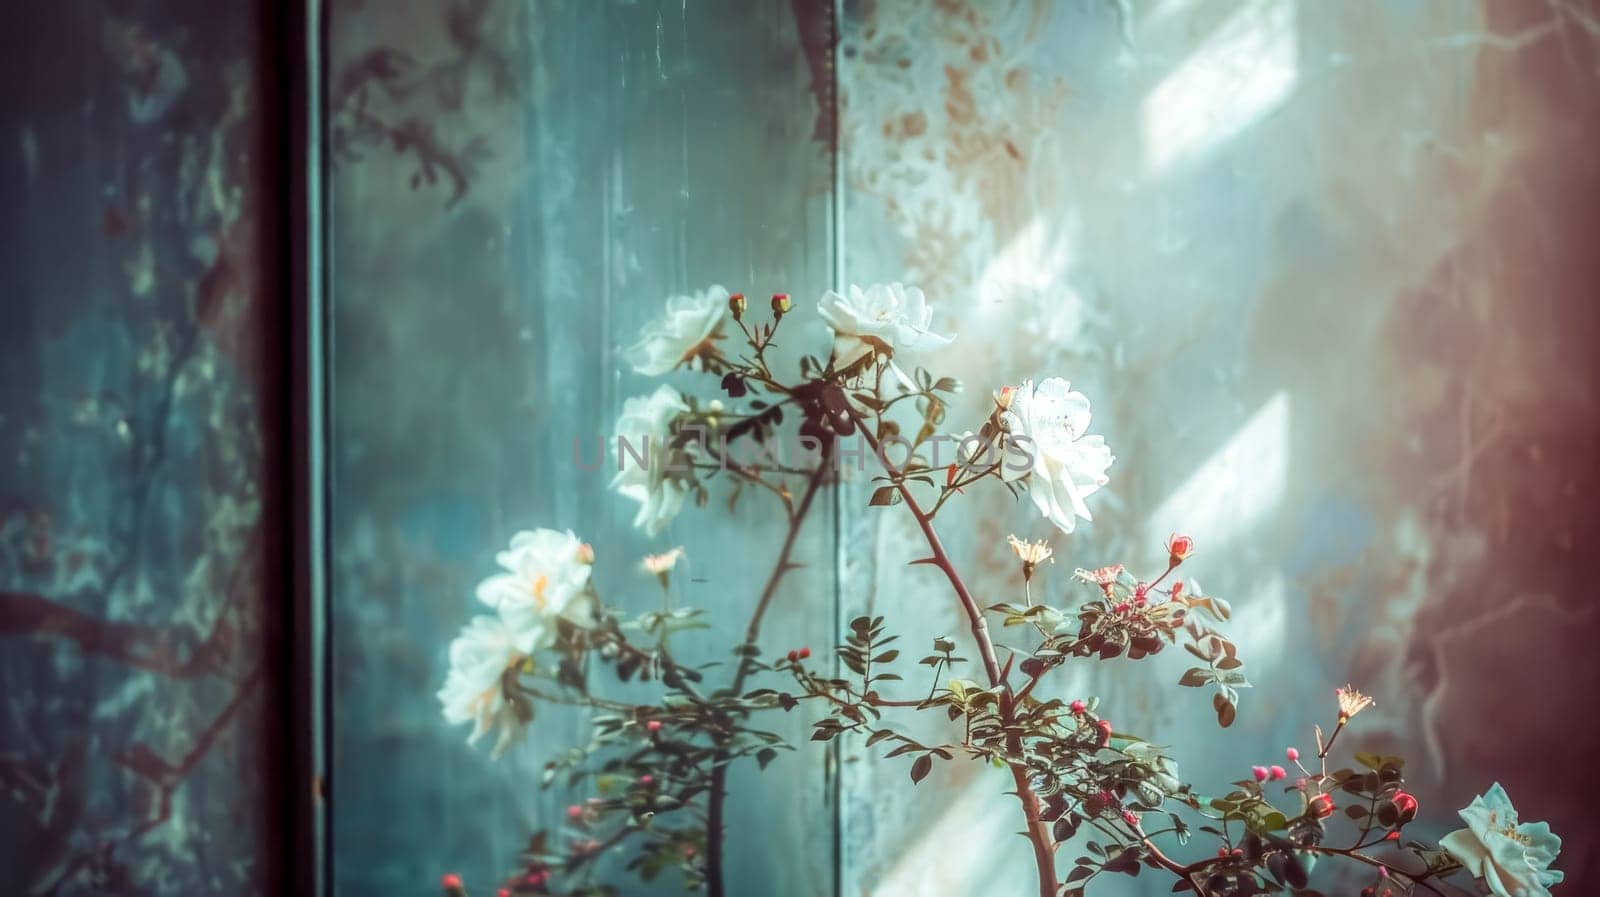 Vintage blooms against rustic window by Edophoto